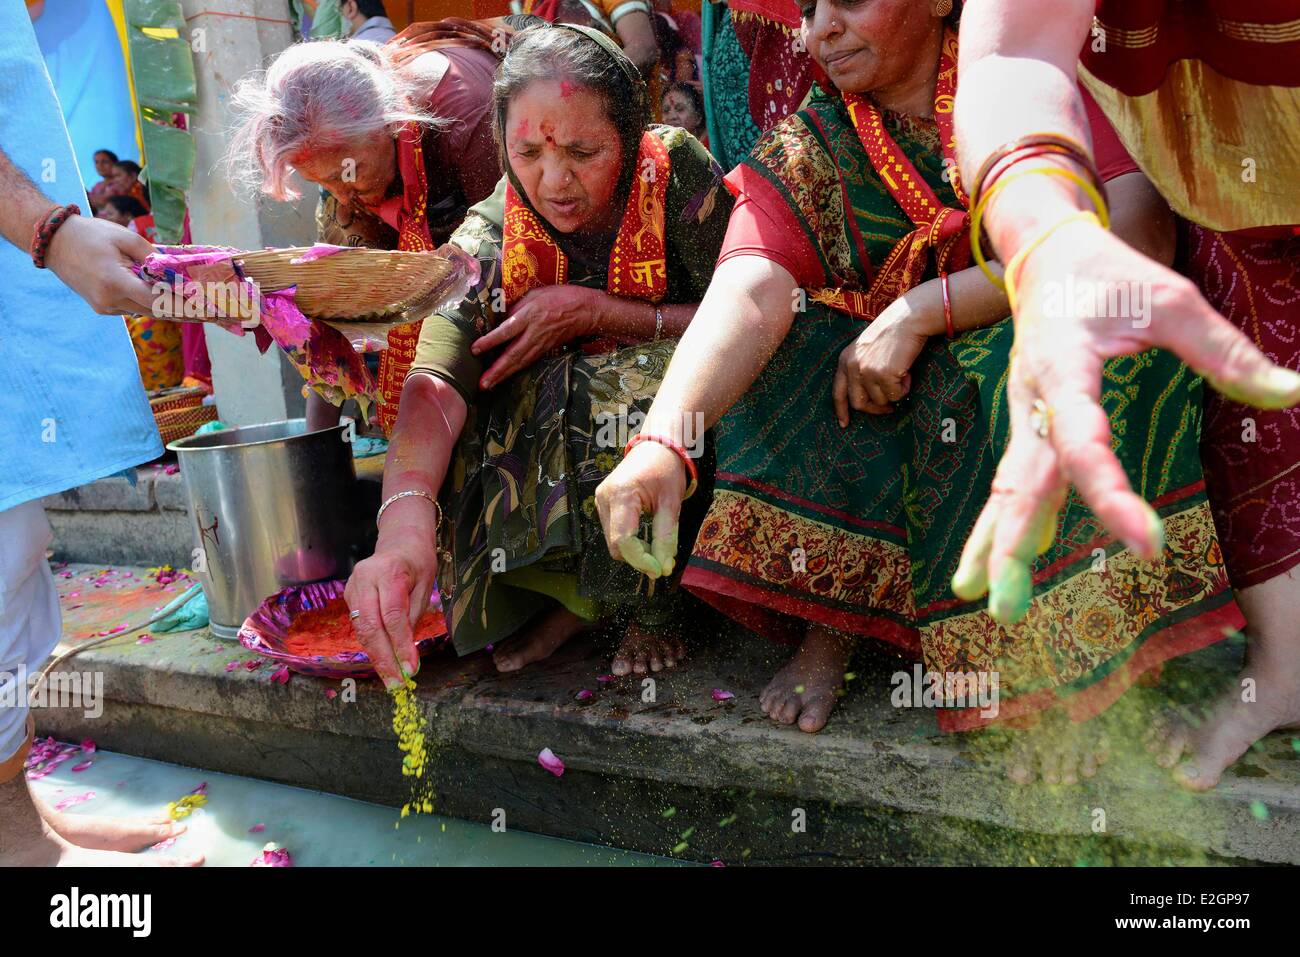 India Uttar Pradesh State Mathura women make puja in river during Holi festival celebrations Stock Photo